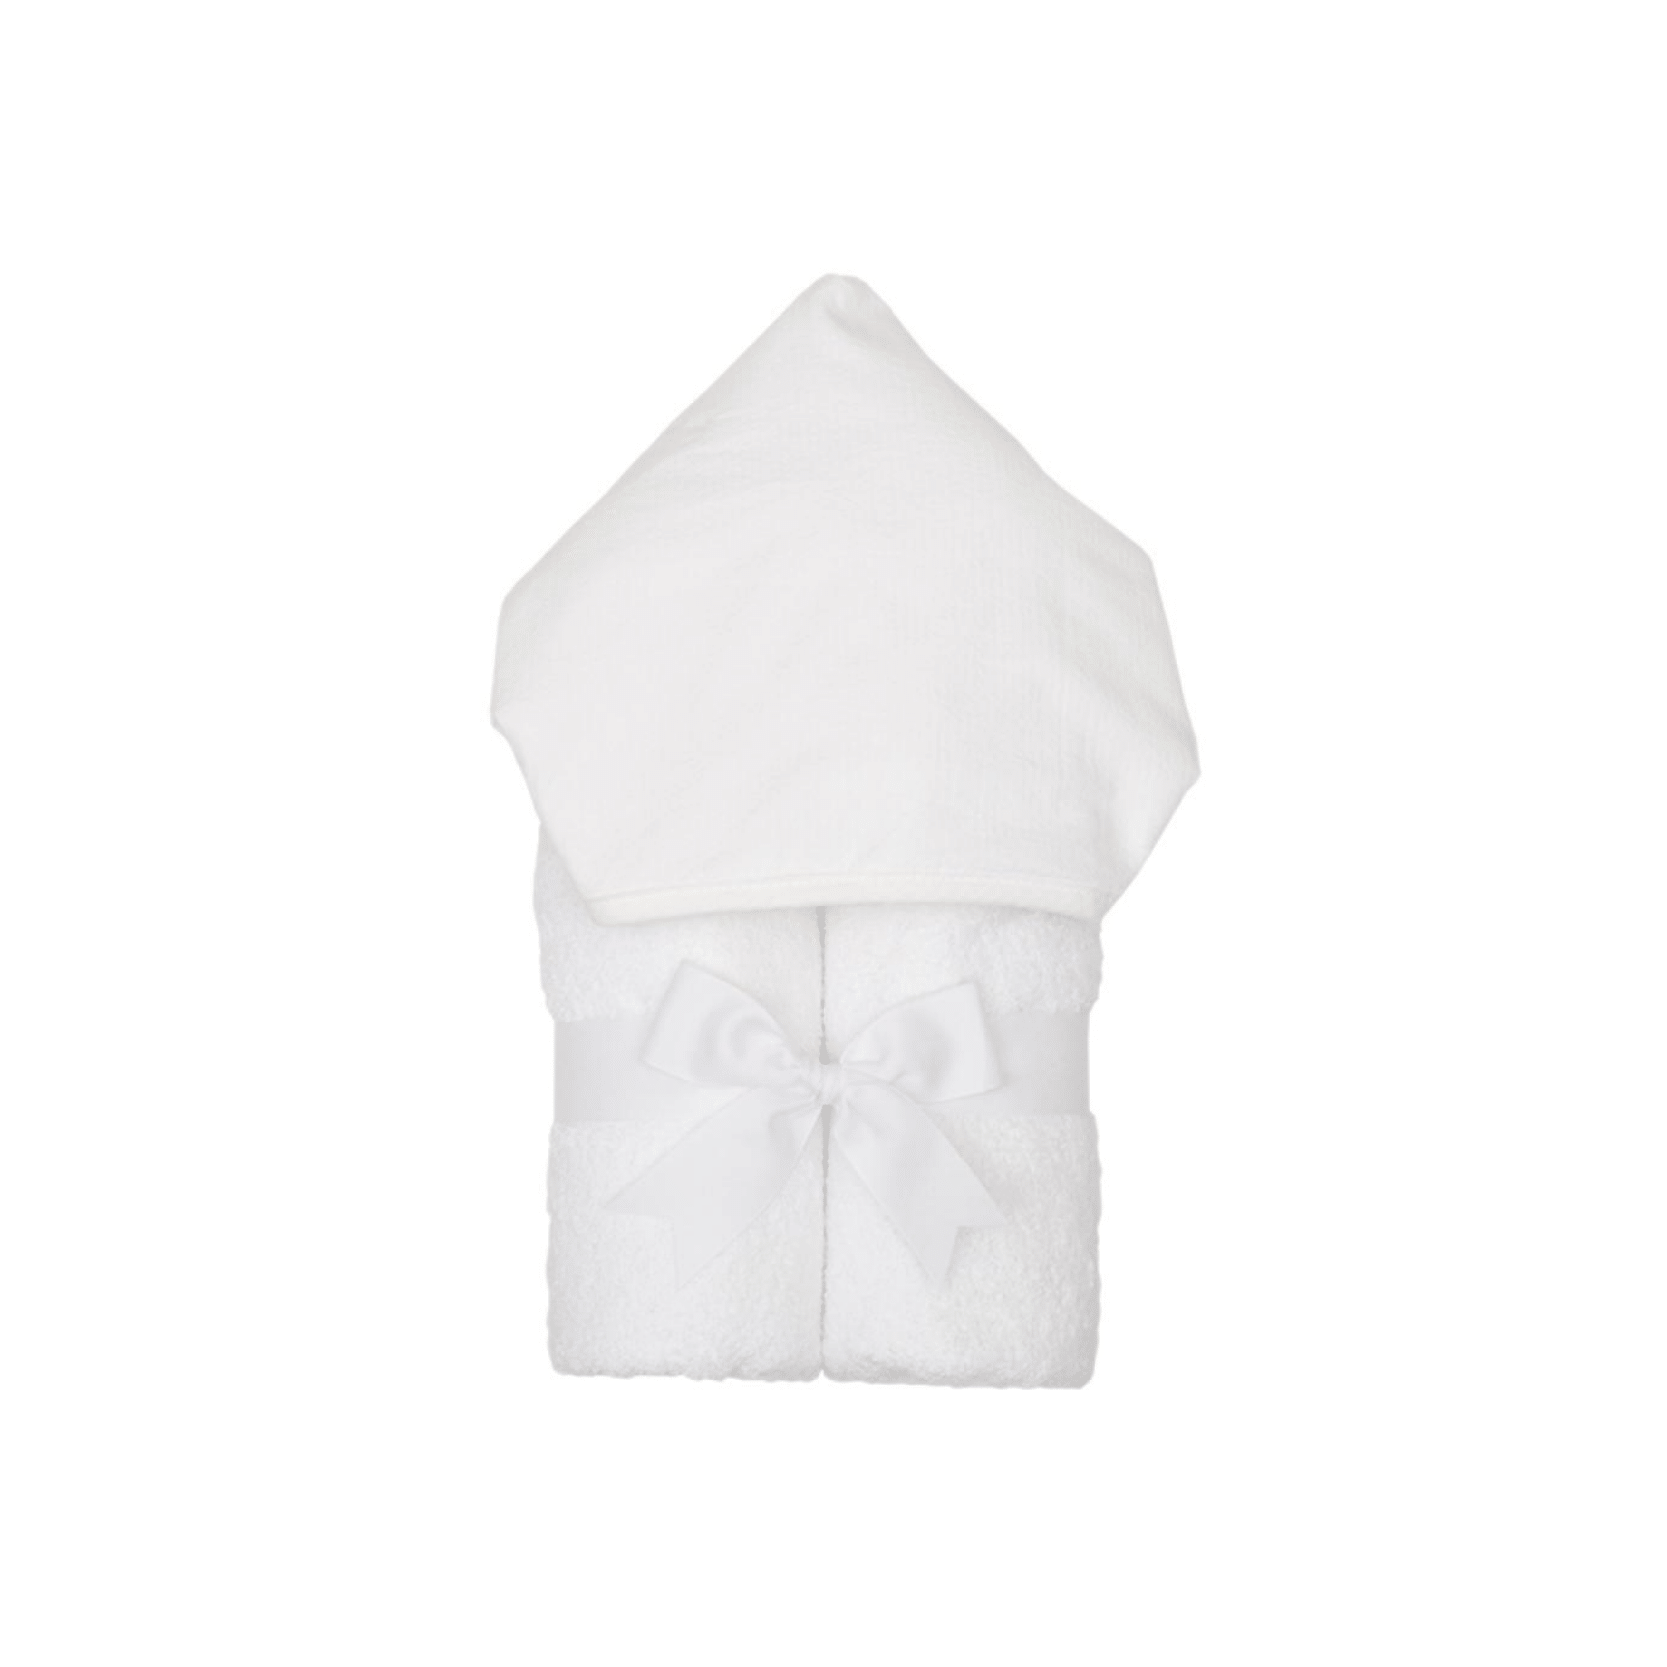 Personalized White Seersucker Stripe Baby Hooded Towel - Give Wink